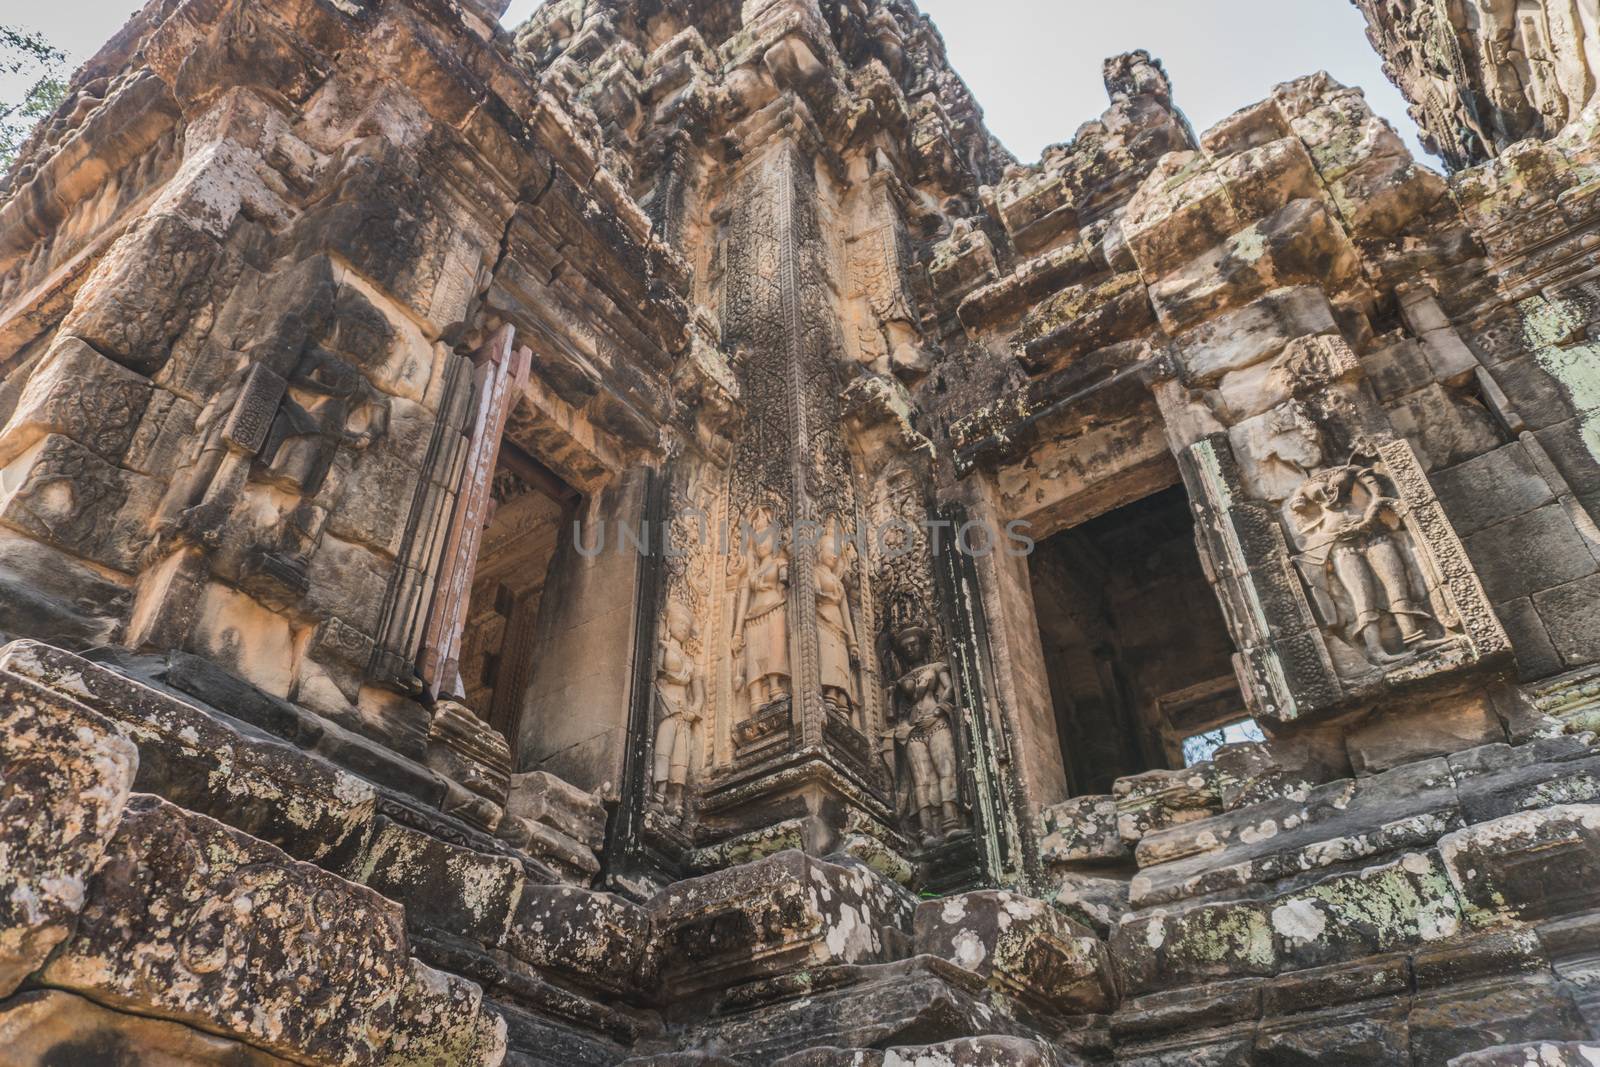 Ancient Angkor Wat Ruins Panorama. Thommanon Temple. Siem Reap, Cambodia 